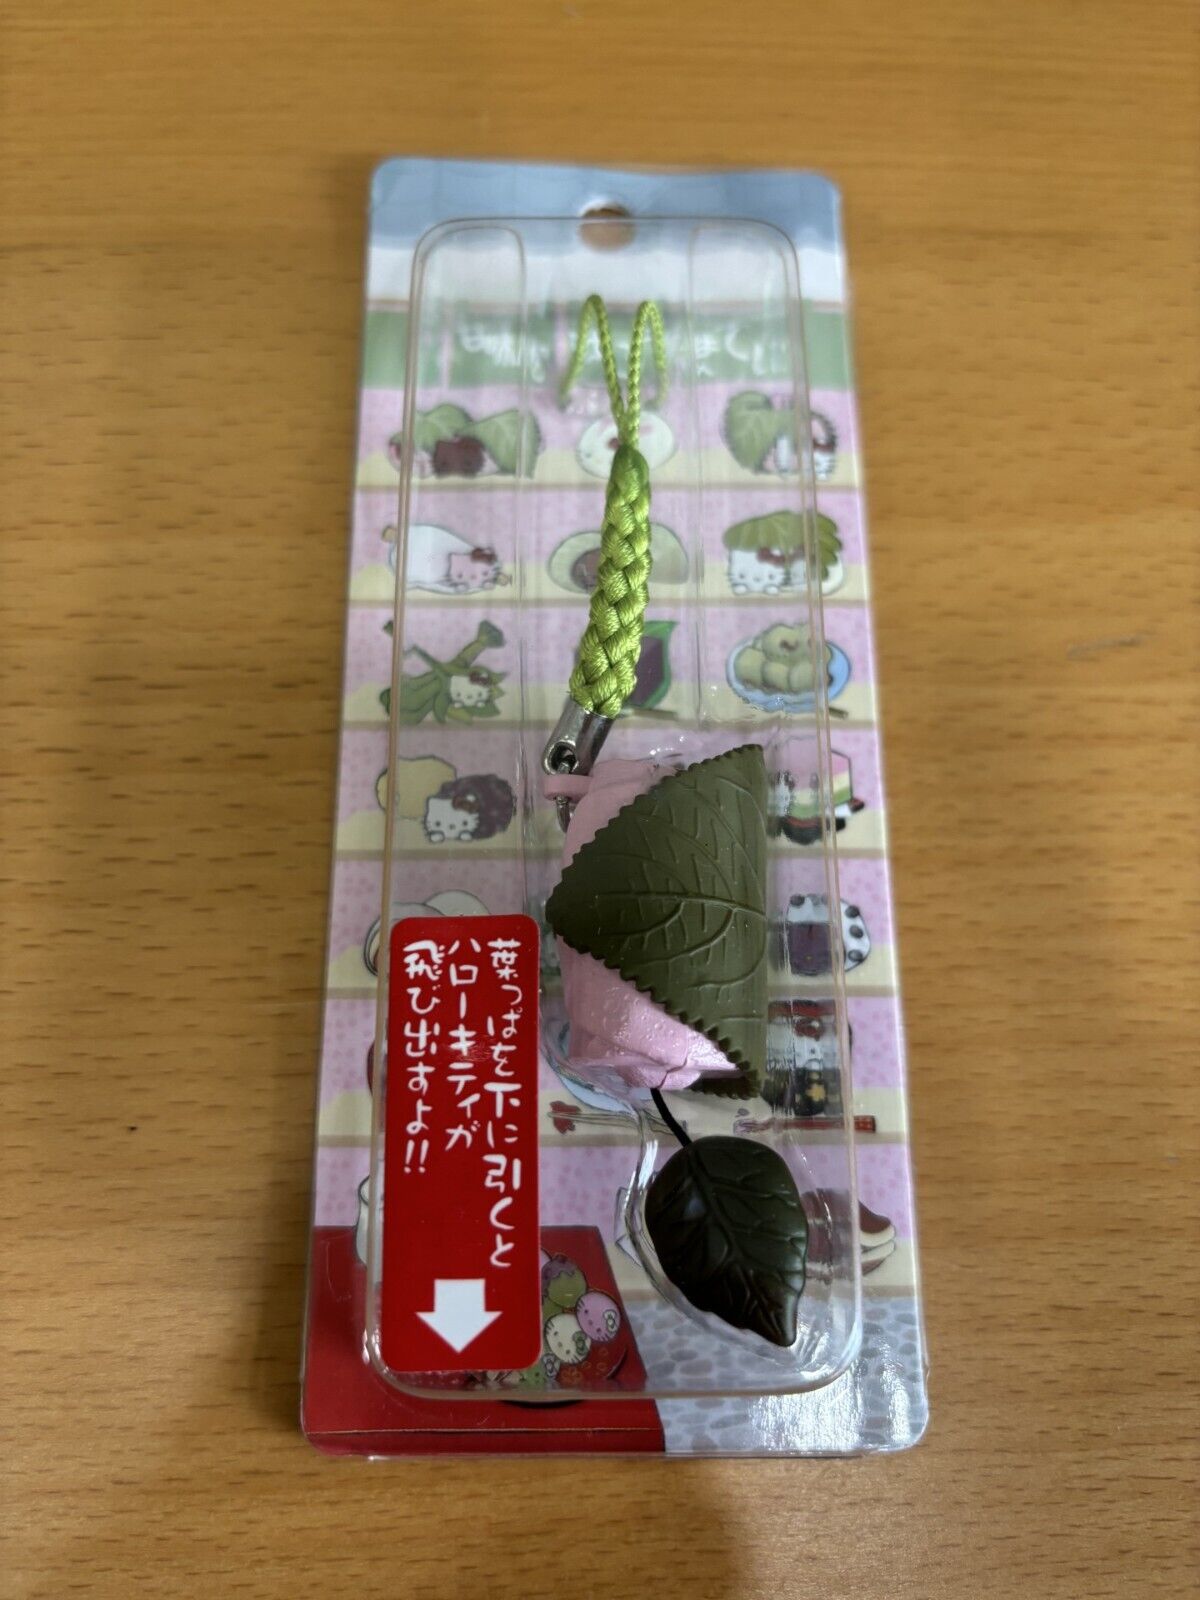 Sanrio Gotochi Hello kitty kashiwamochi Japan key chain Accessories Pink in box